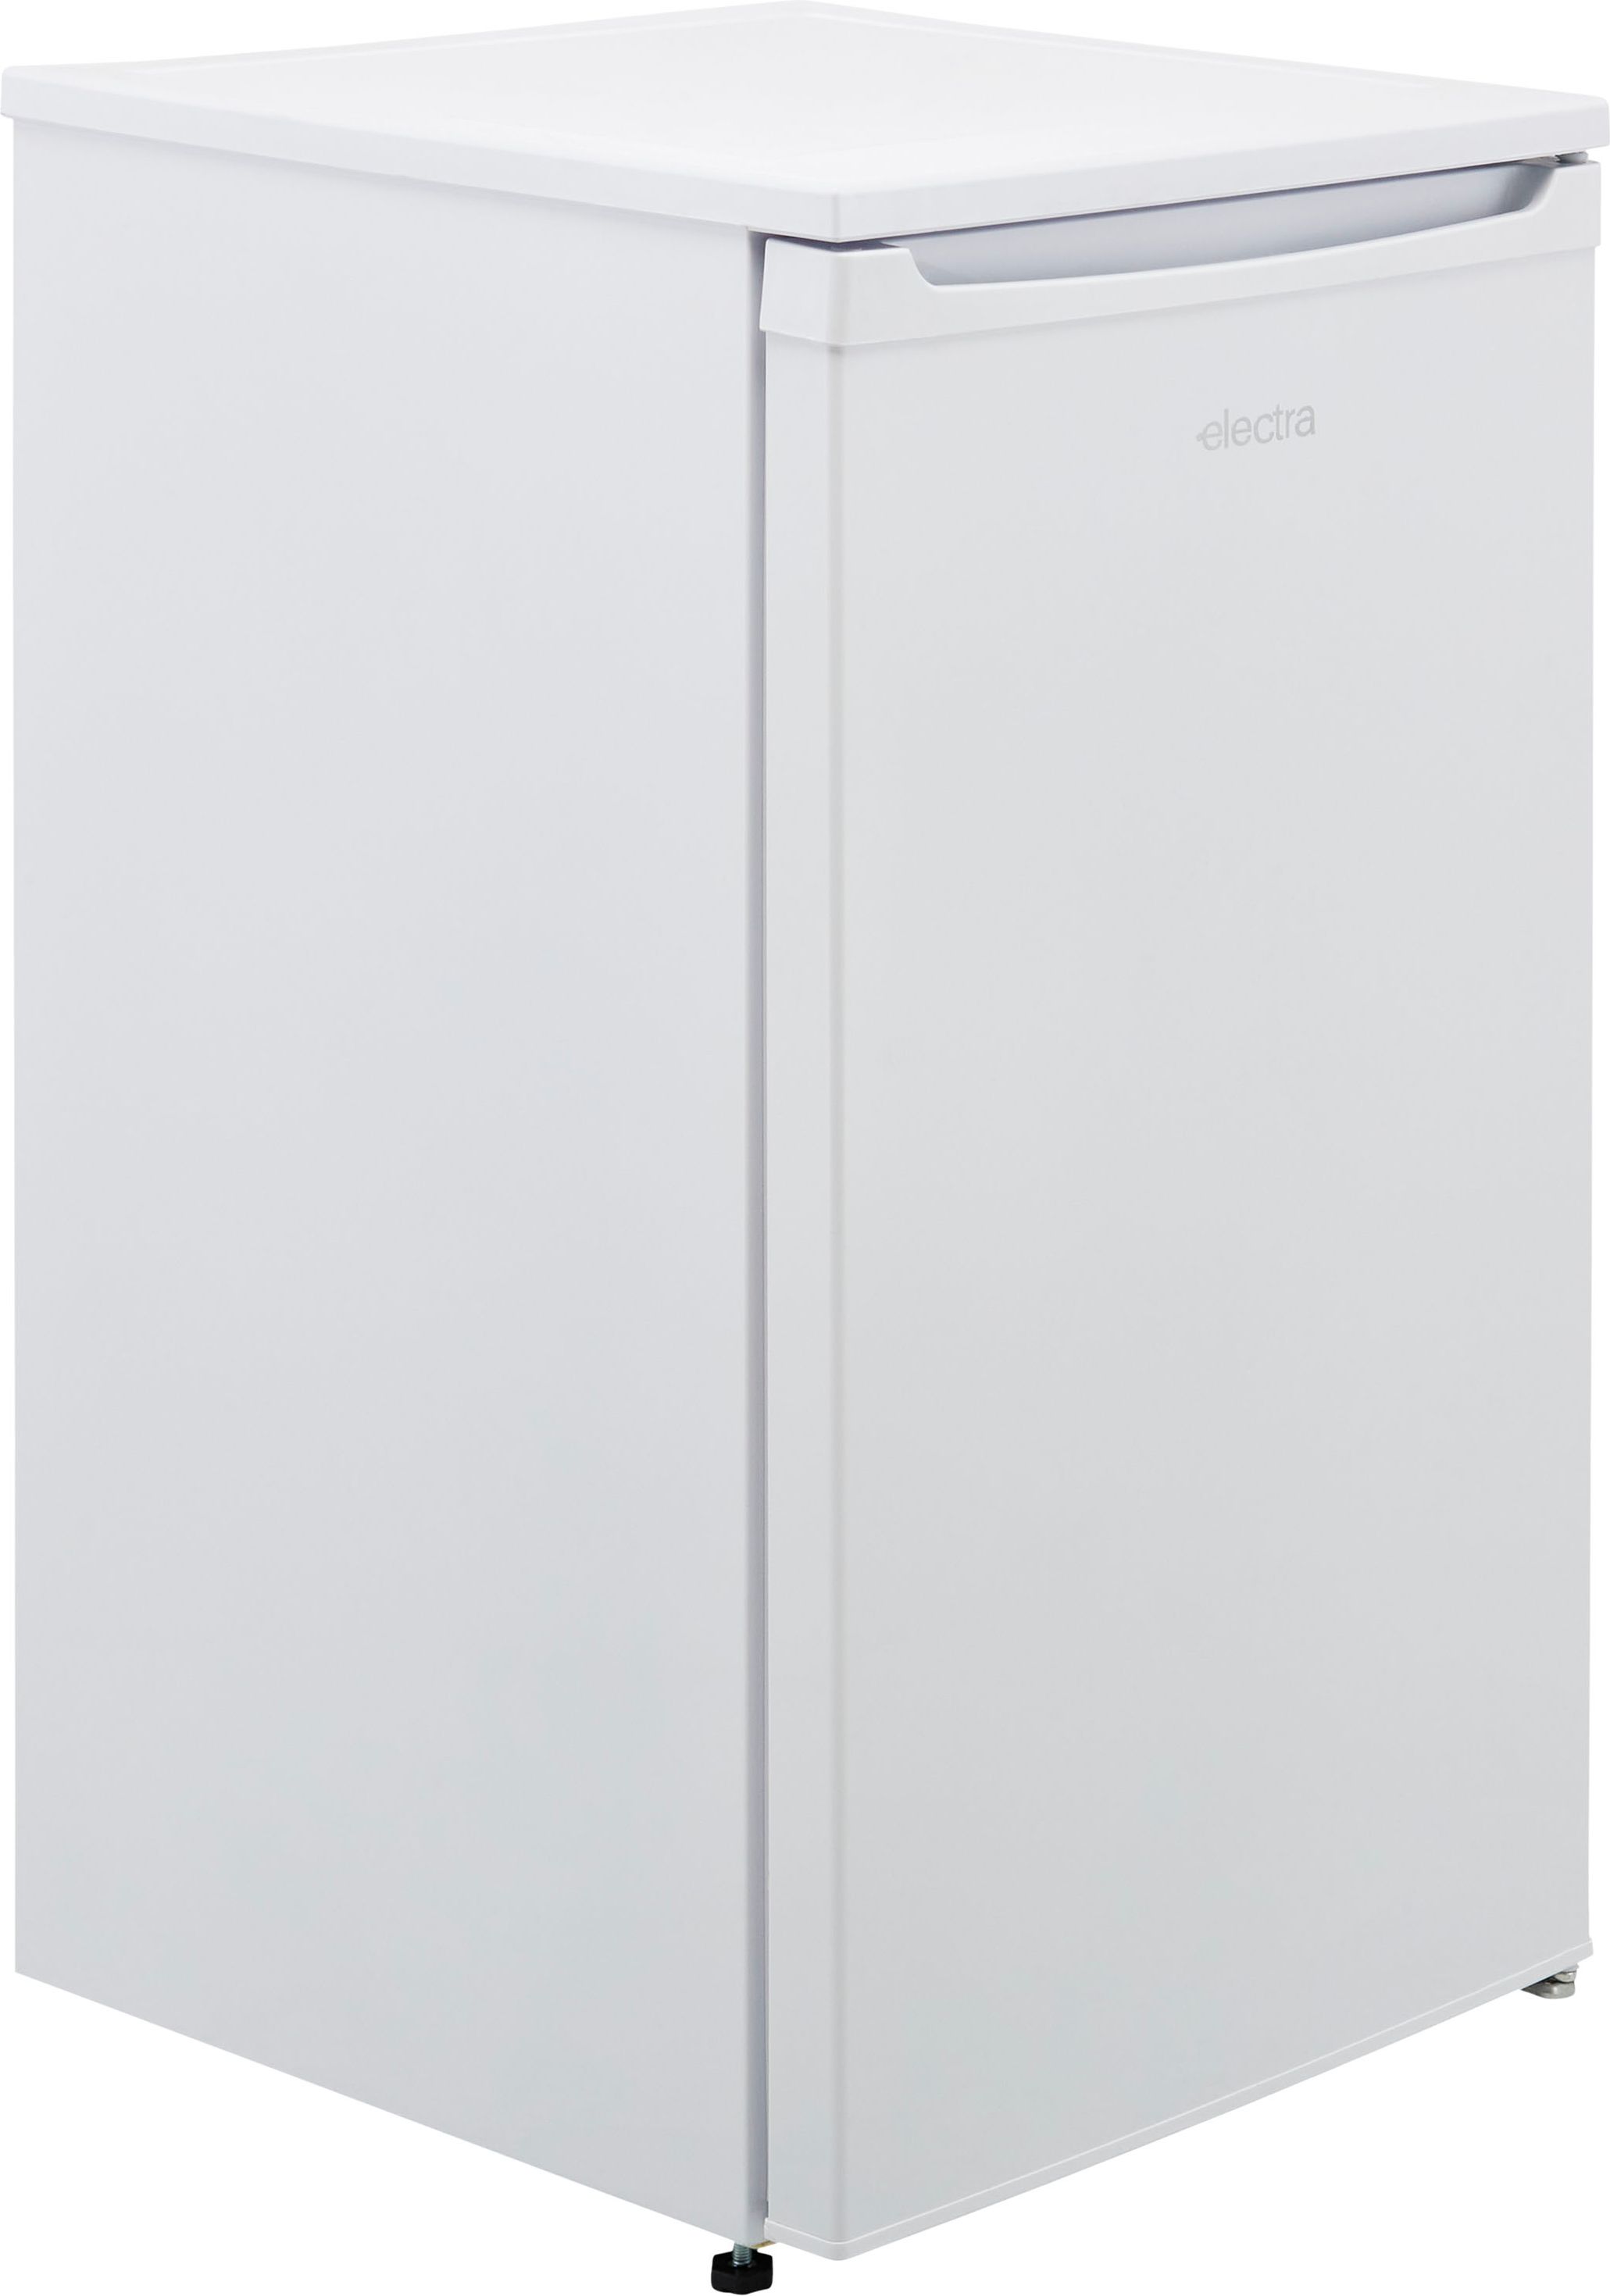 Electra EFUZ48WE Under Counter Freezer - White - F Rated